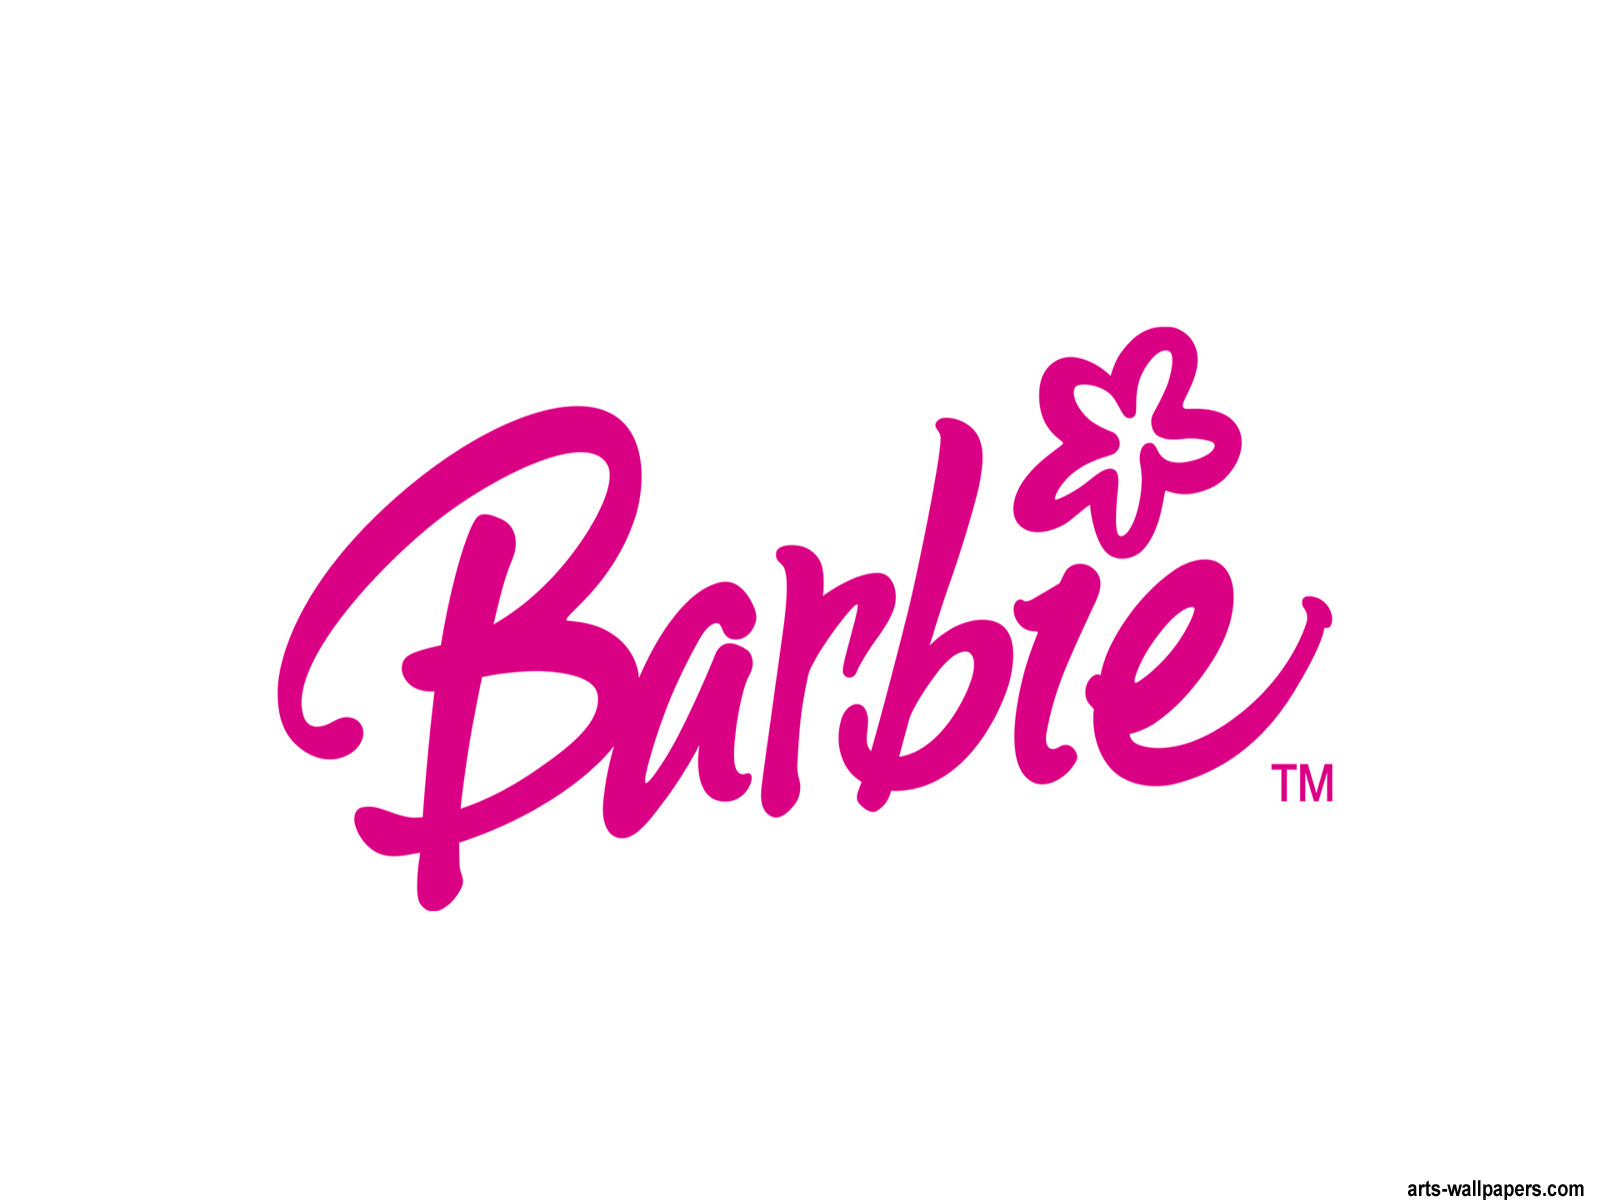 Barbie Logo Wallpapers HD   CM simples e completoCM simples e